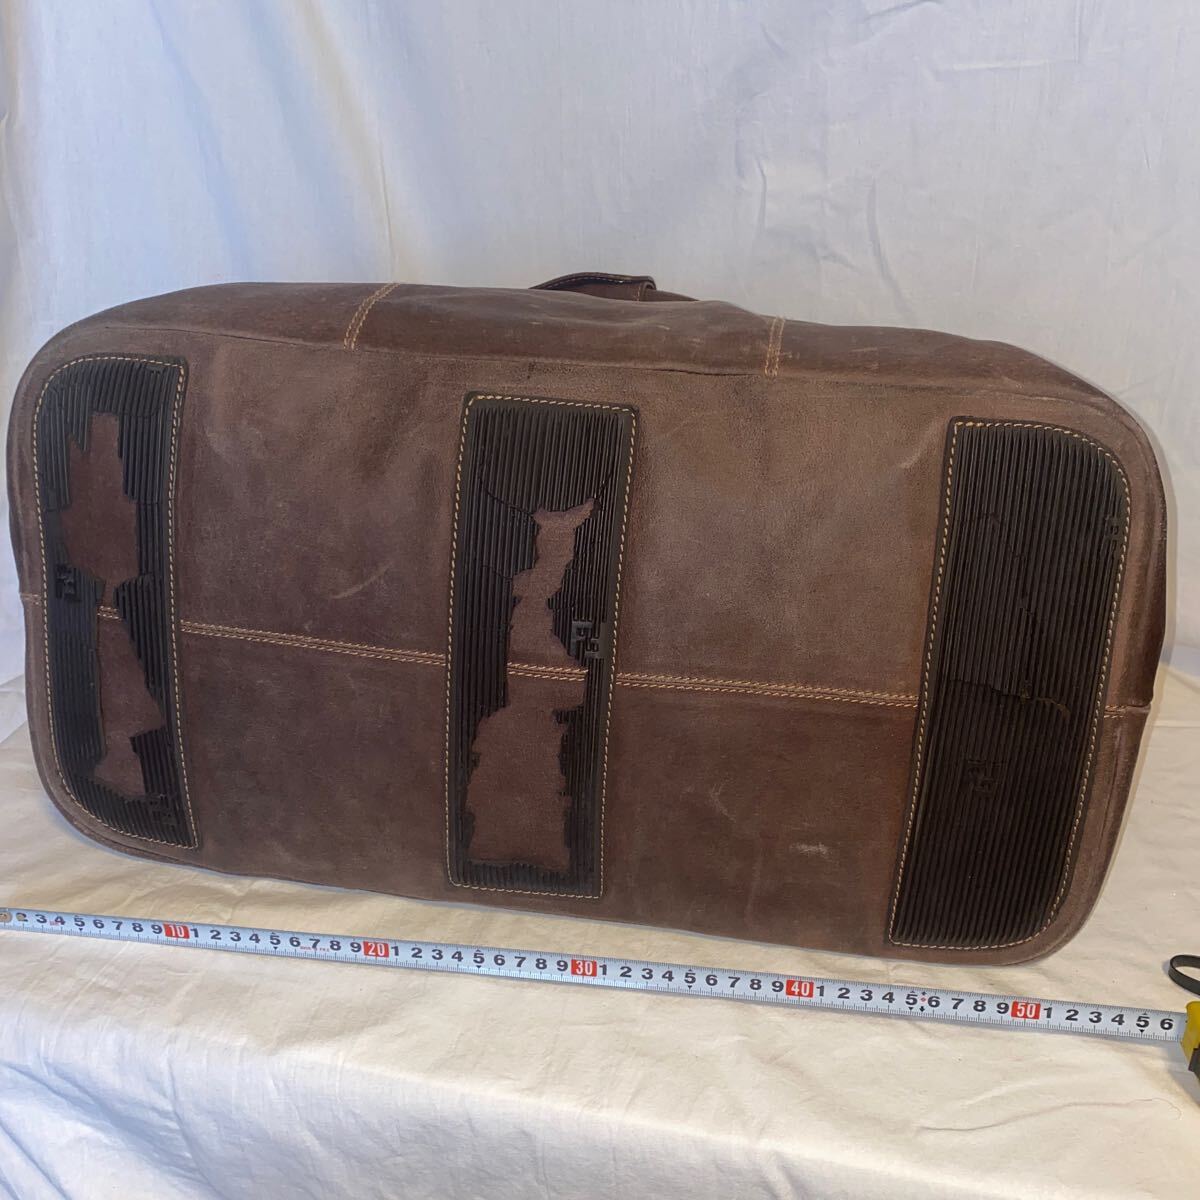 FENDI Fendi сумка "Boston bag" натуральная кожа Brown несколько раз применяющийся товар 